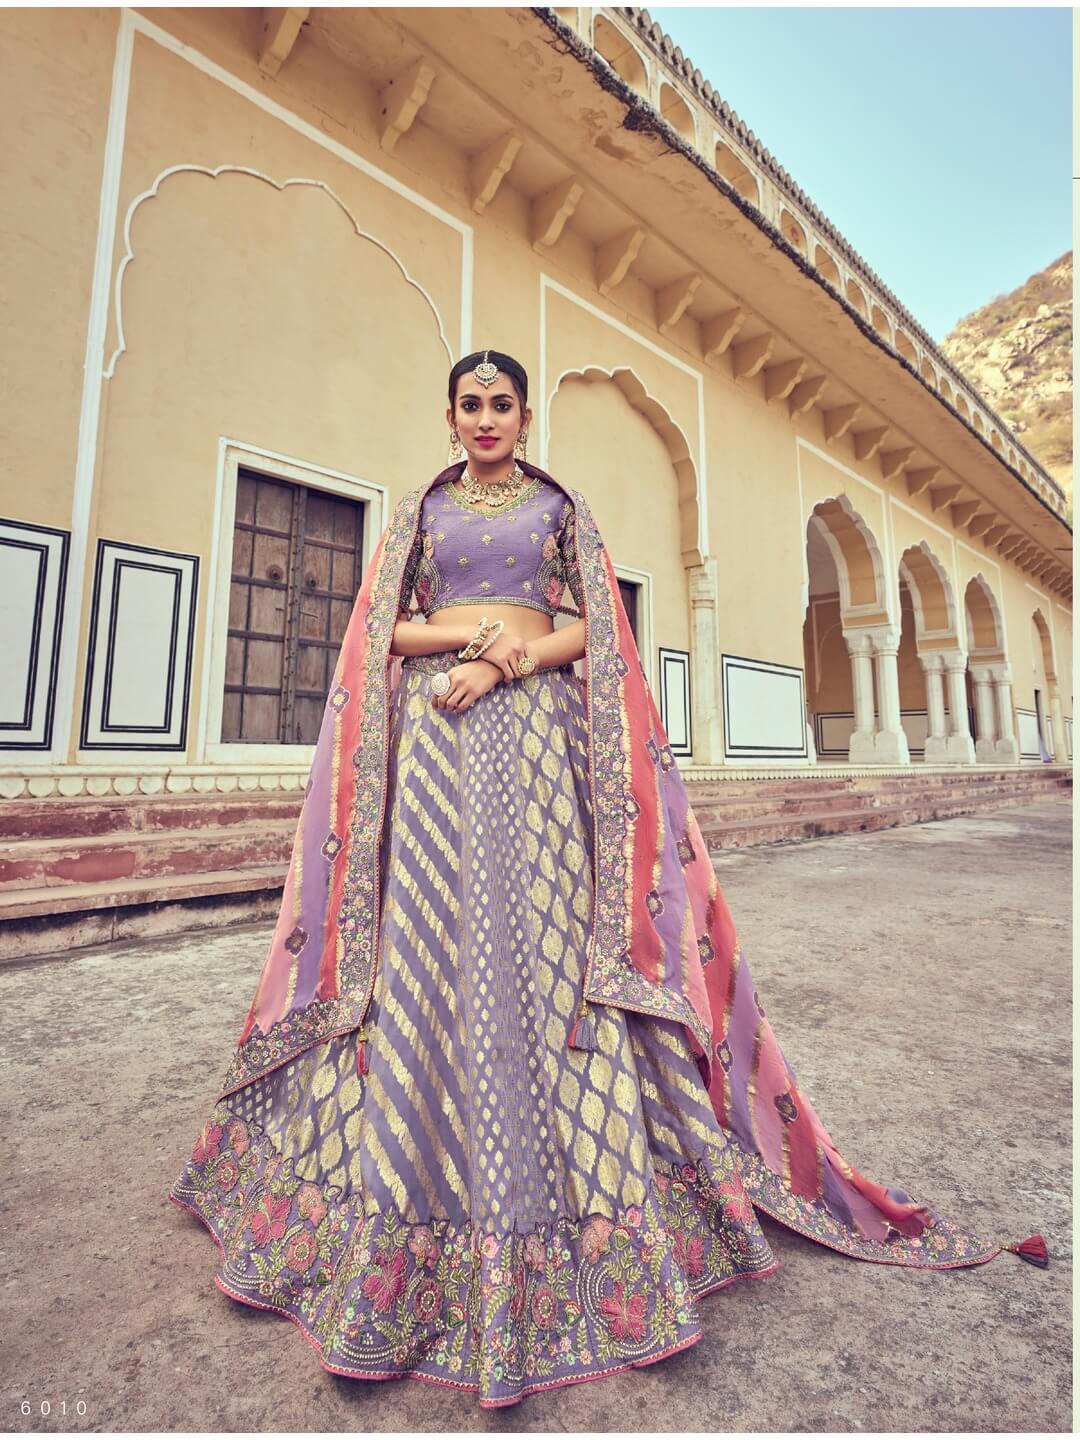 These Are The Most Gorgeous Banarasi Lehengas Worn By Our Favourite Brides!  | Indian fashion, Lehenga style, Mehendi outfits